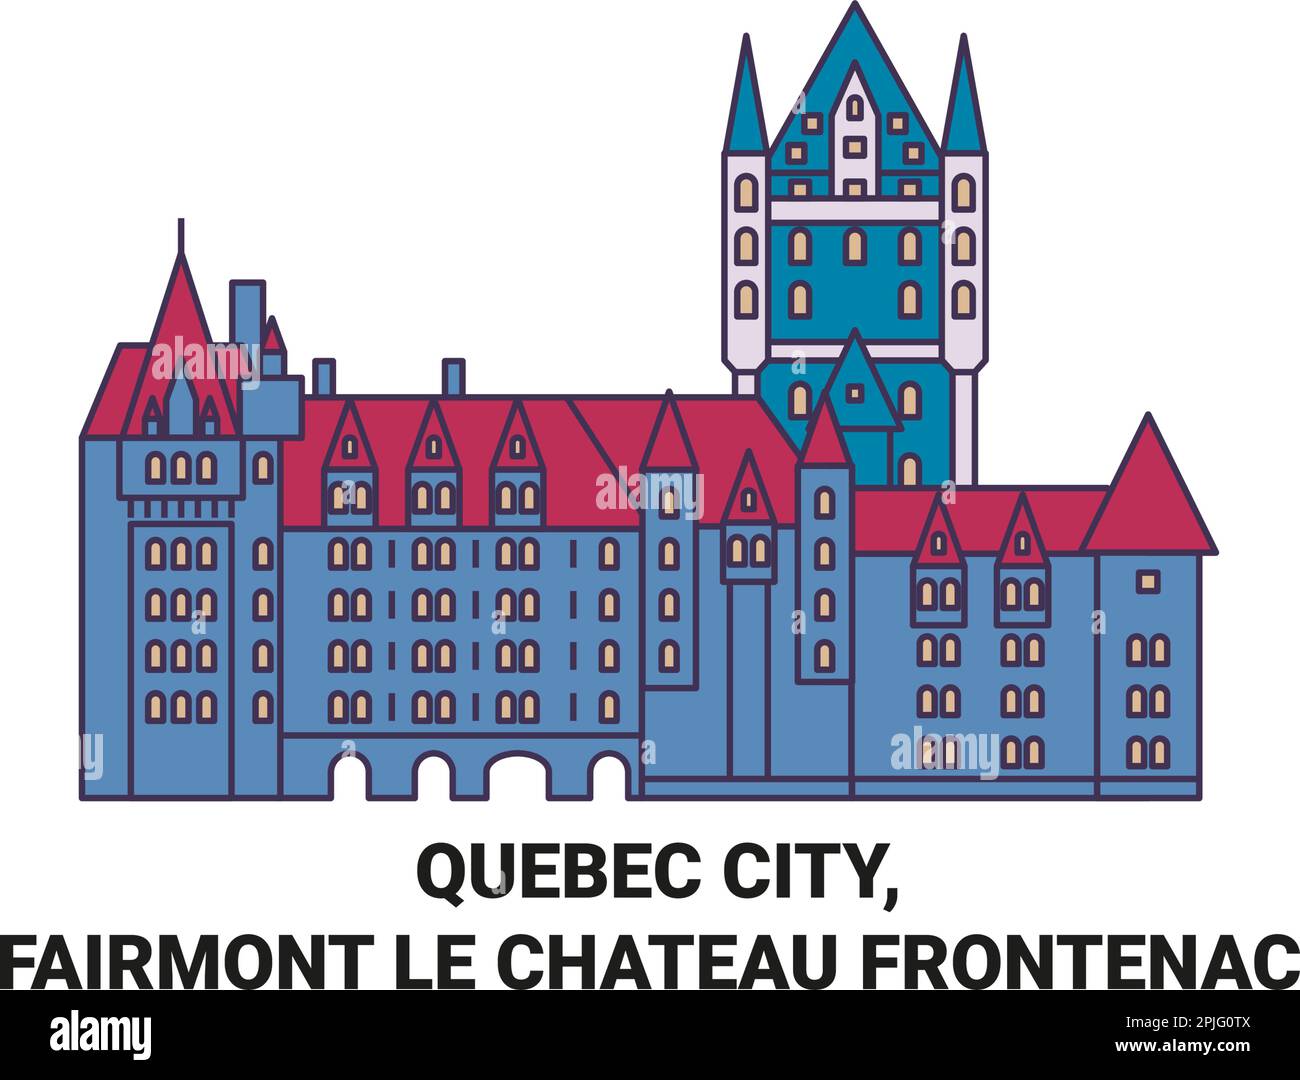 Vektorgrafik für Reisen nach Kanada, Quebec City, Fairmont Le Chateau Frontenac Stock Vektor